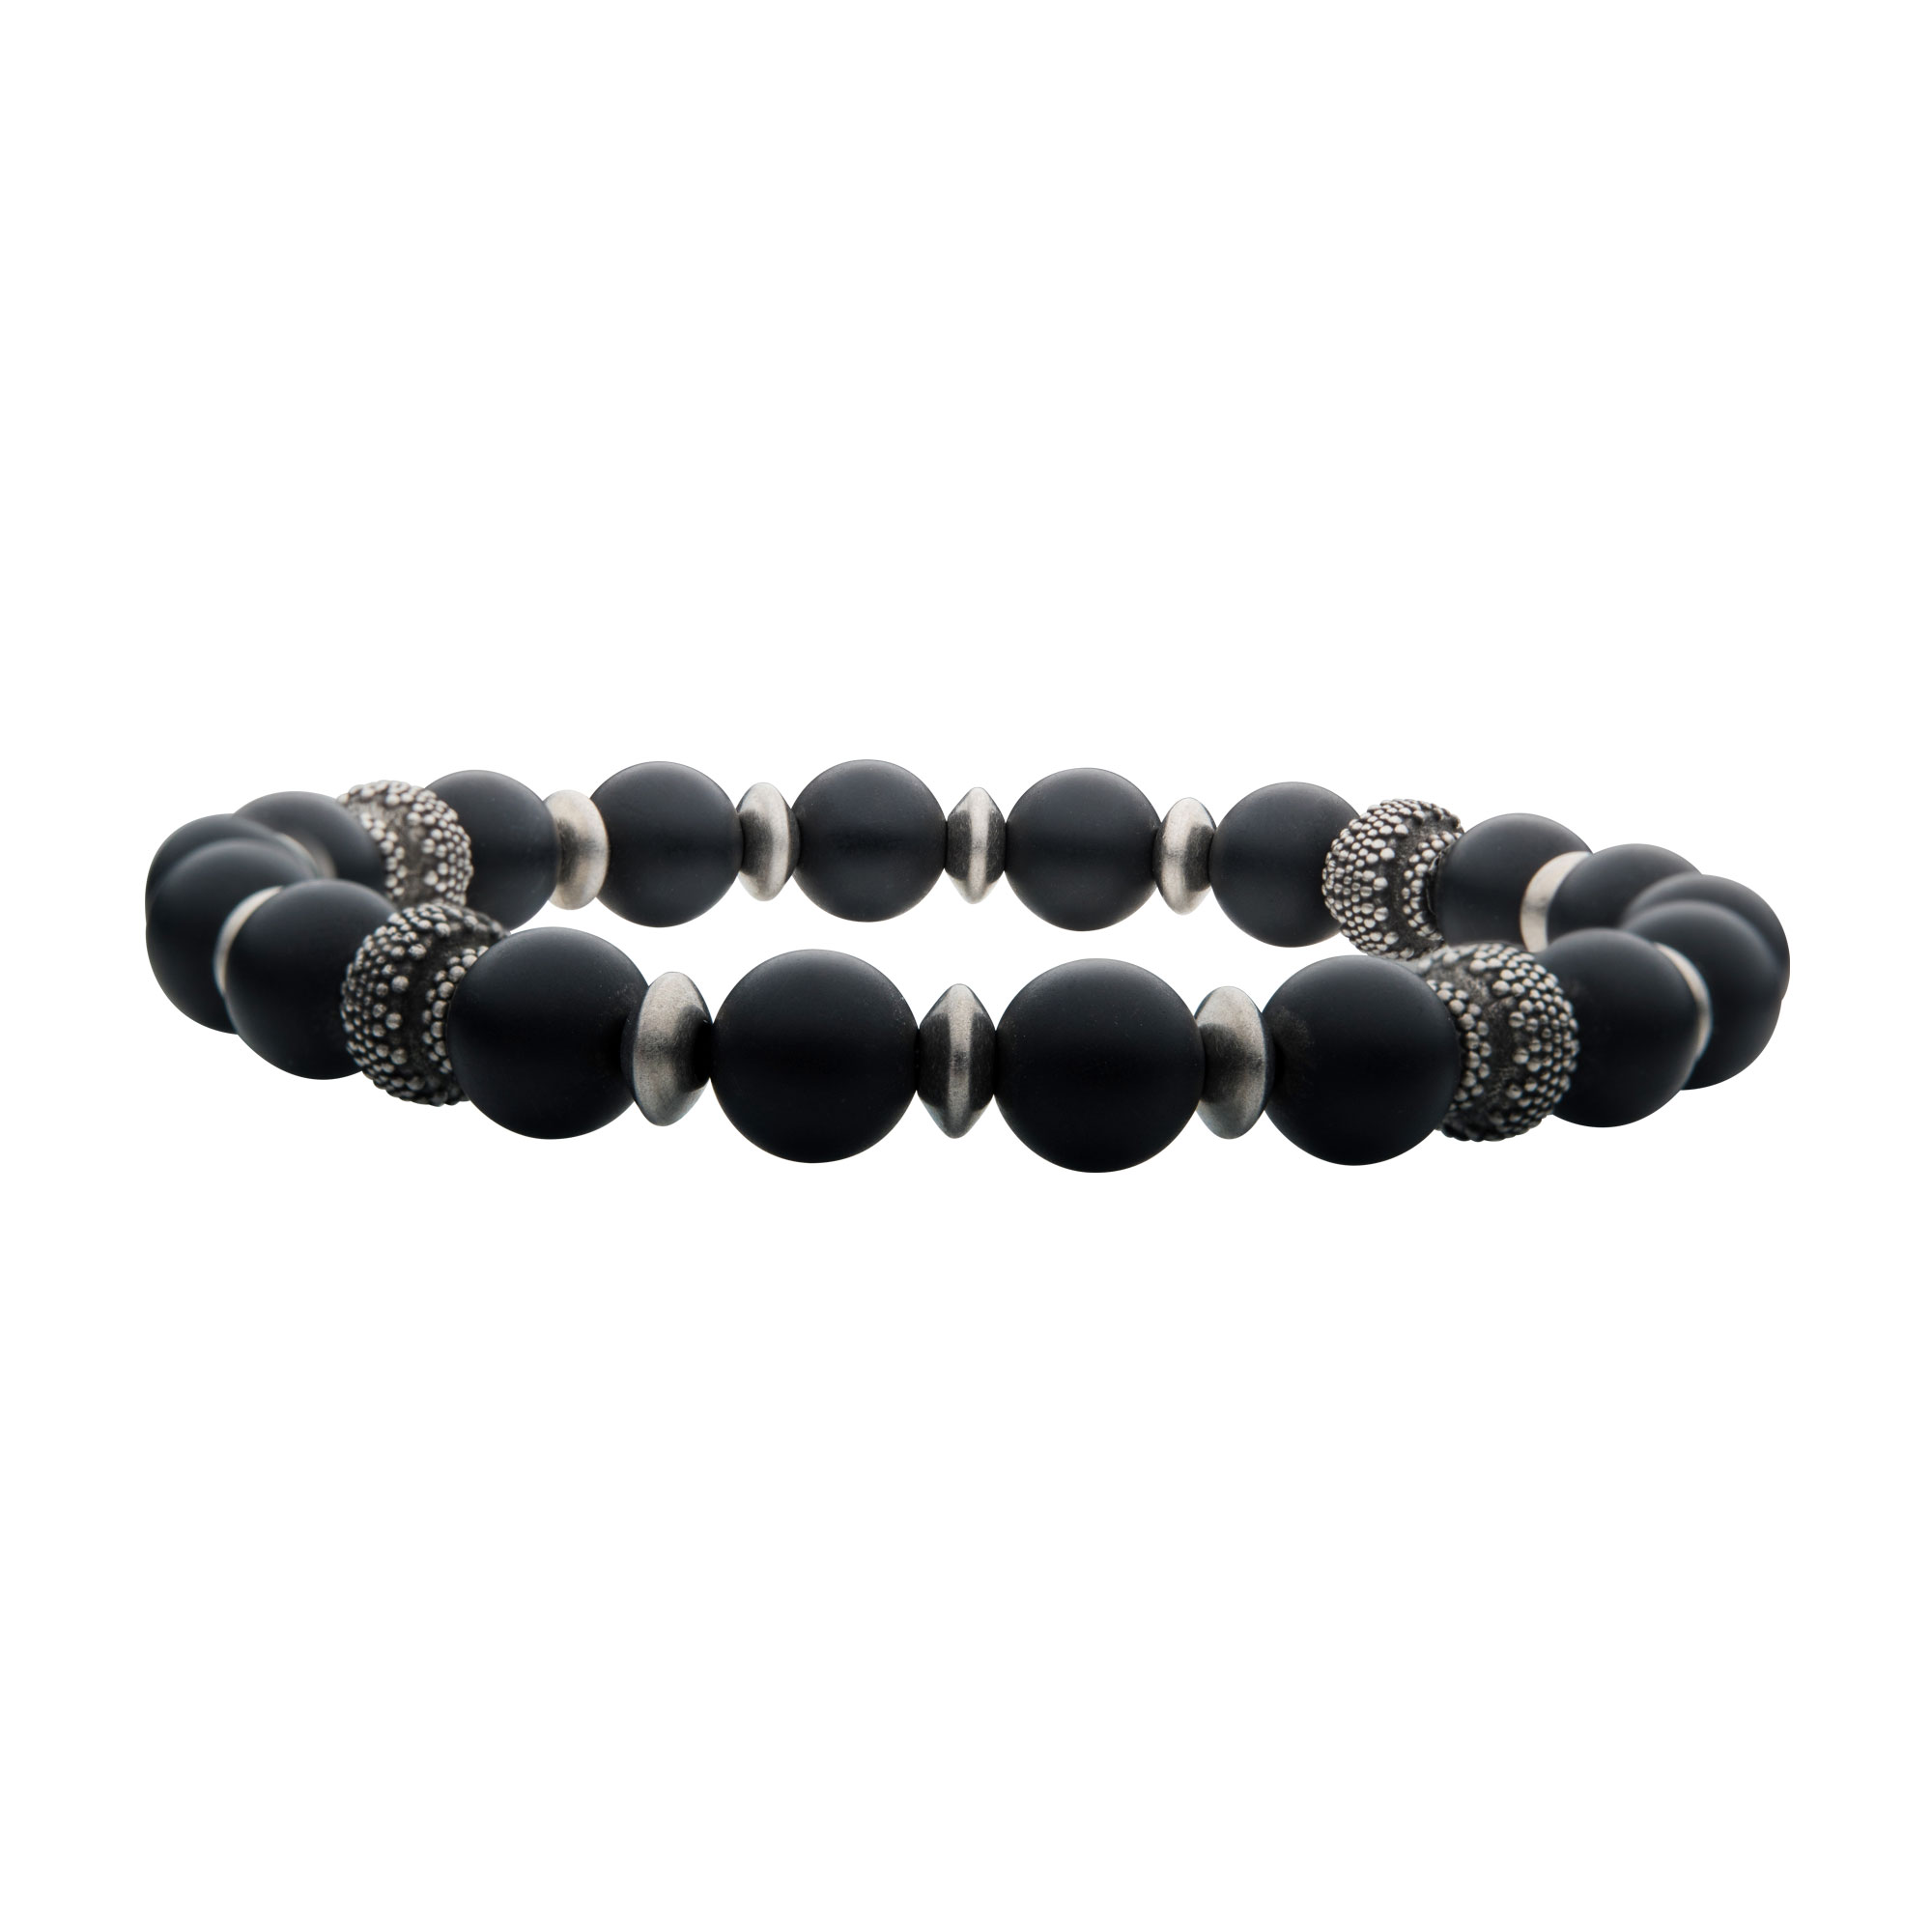 Matte Black Agate Stones with Black Oxidized Beads Bracelet Ritzi Jewelers Brookville, IN